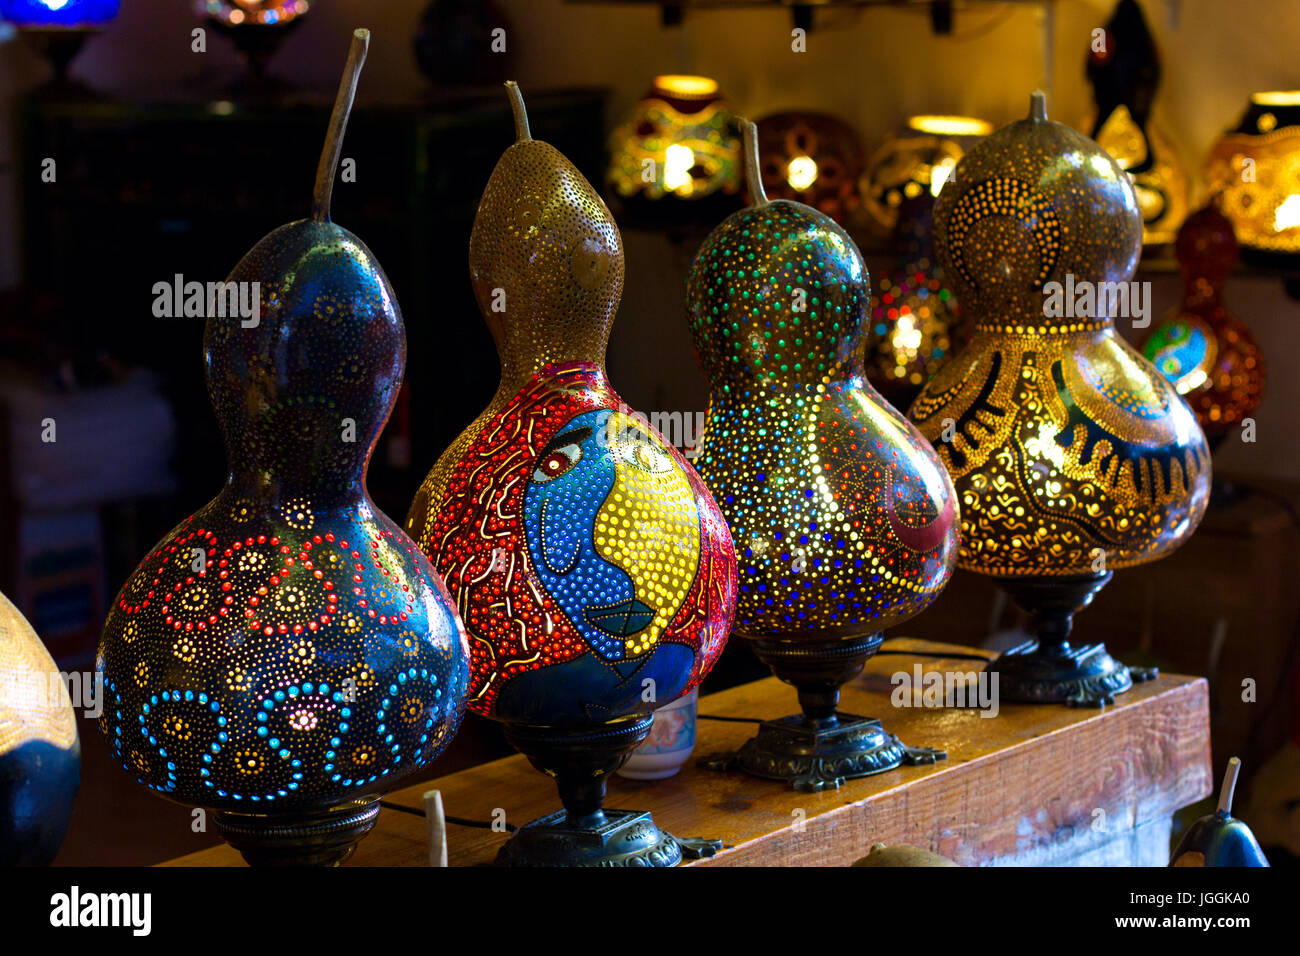 Traditionelle türkische handgefertigte Lampen aus getrockneten Kürbissen  Stockfotografie - Alamy